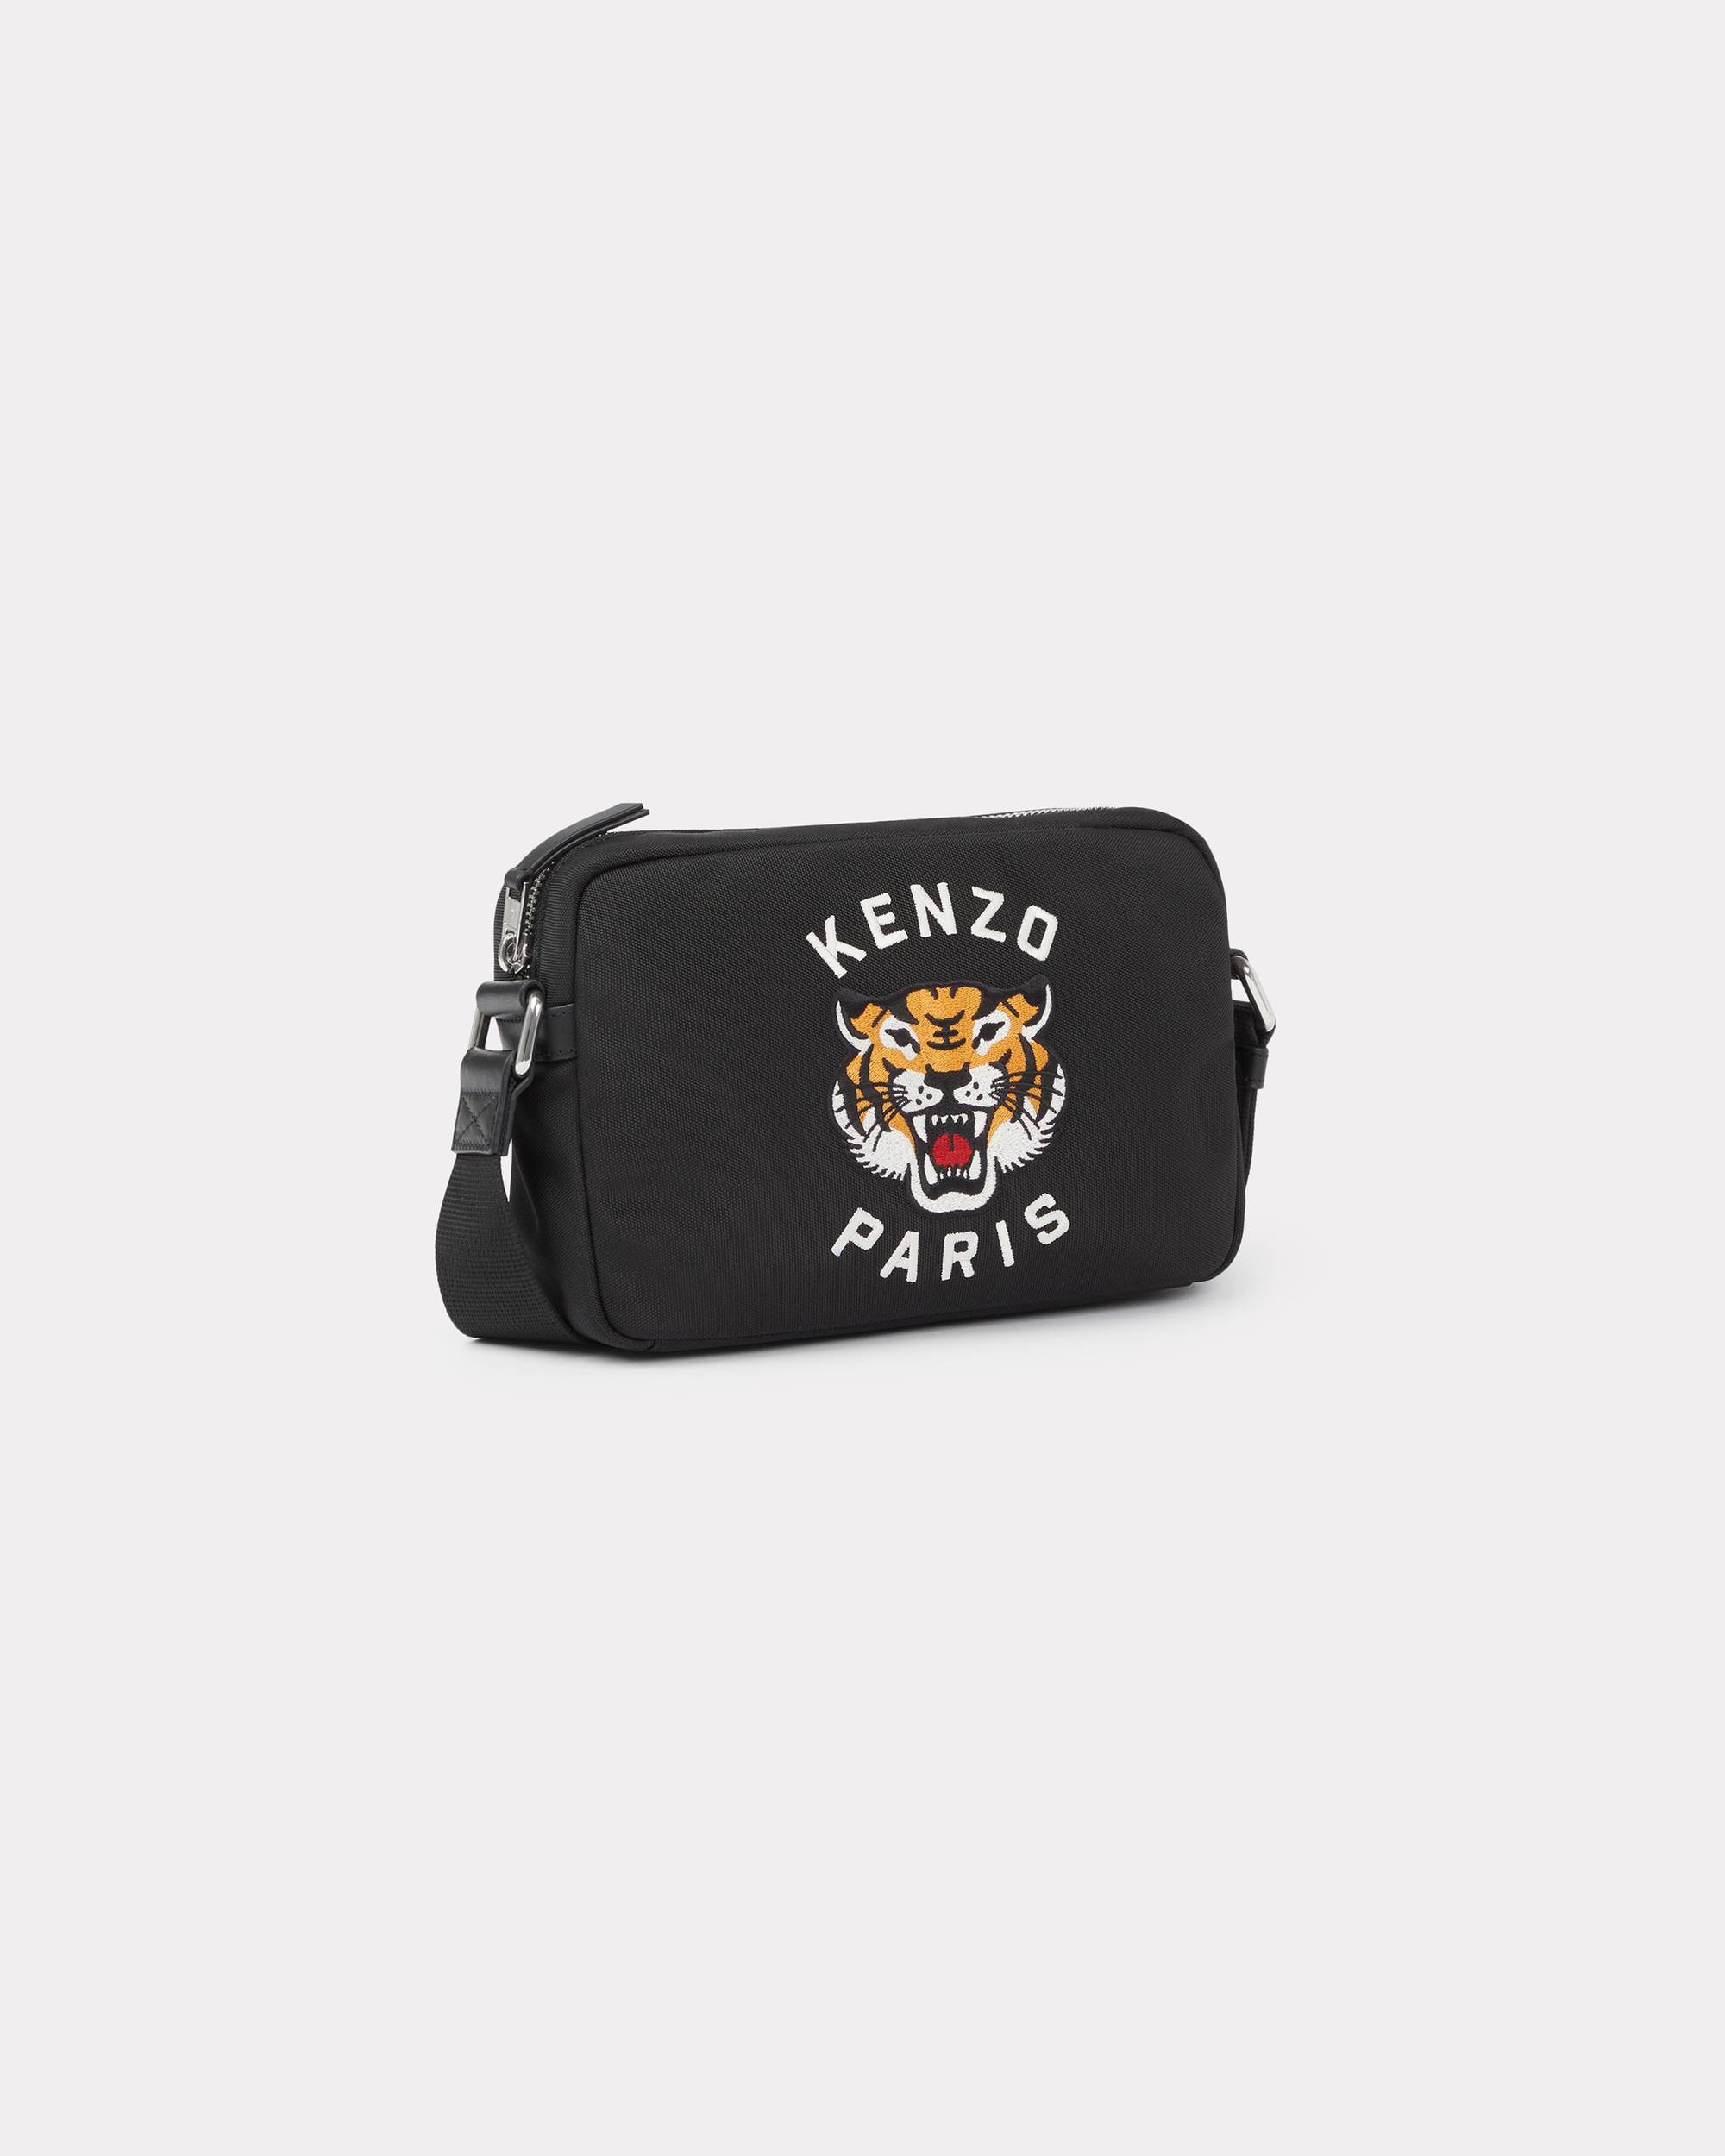 'KENZO Varsity' embroidered handbag - 1